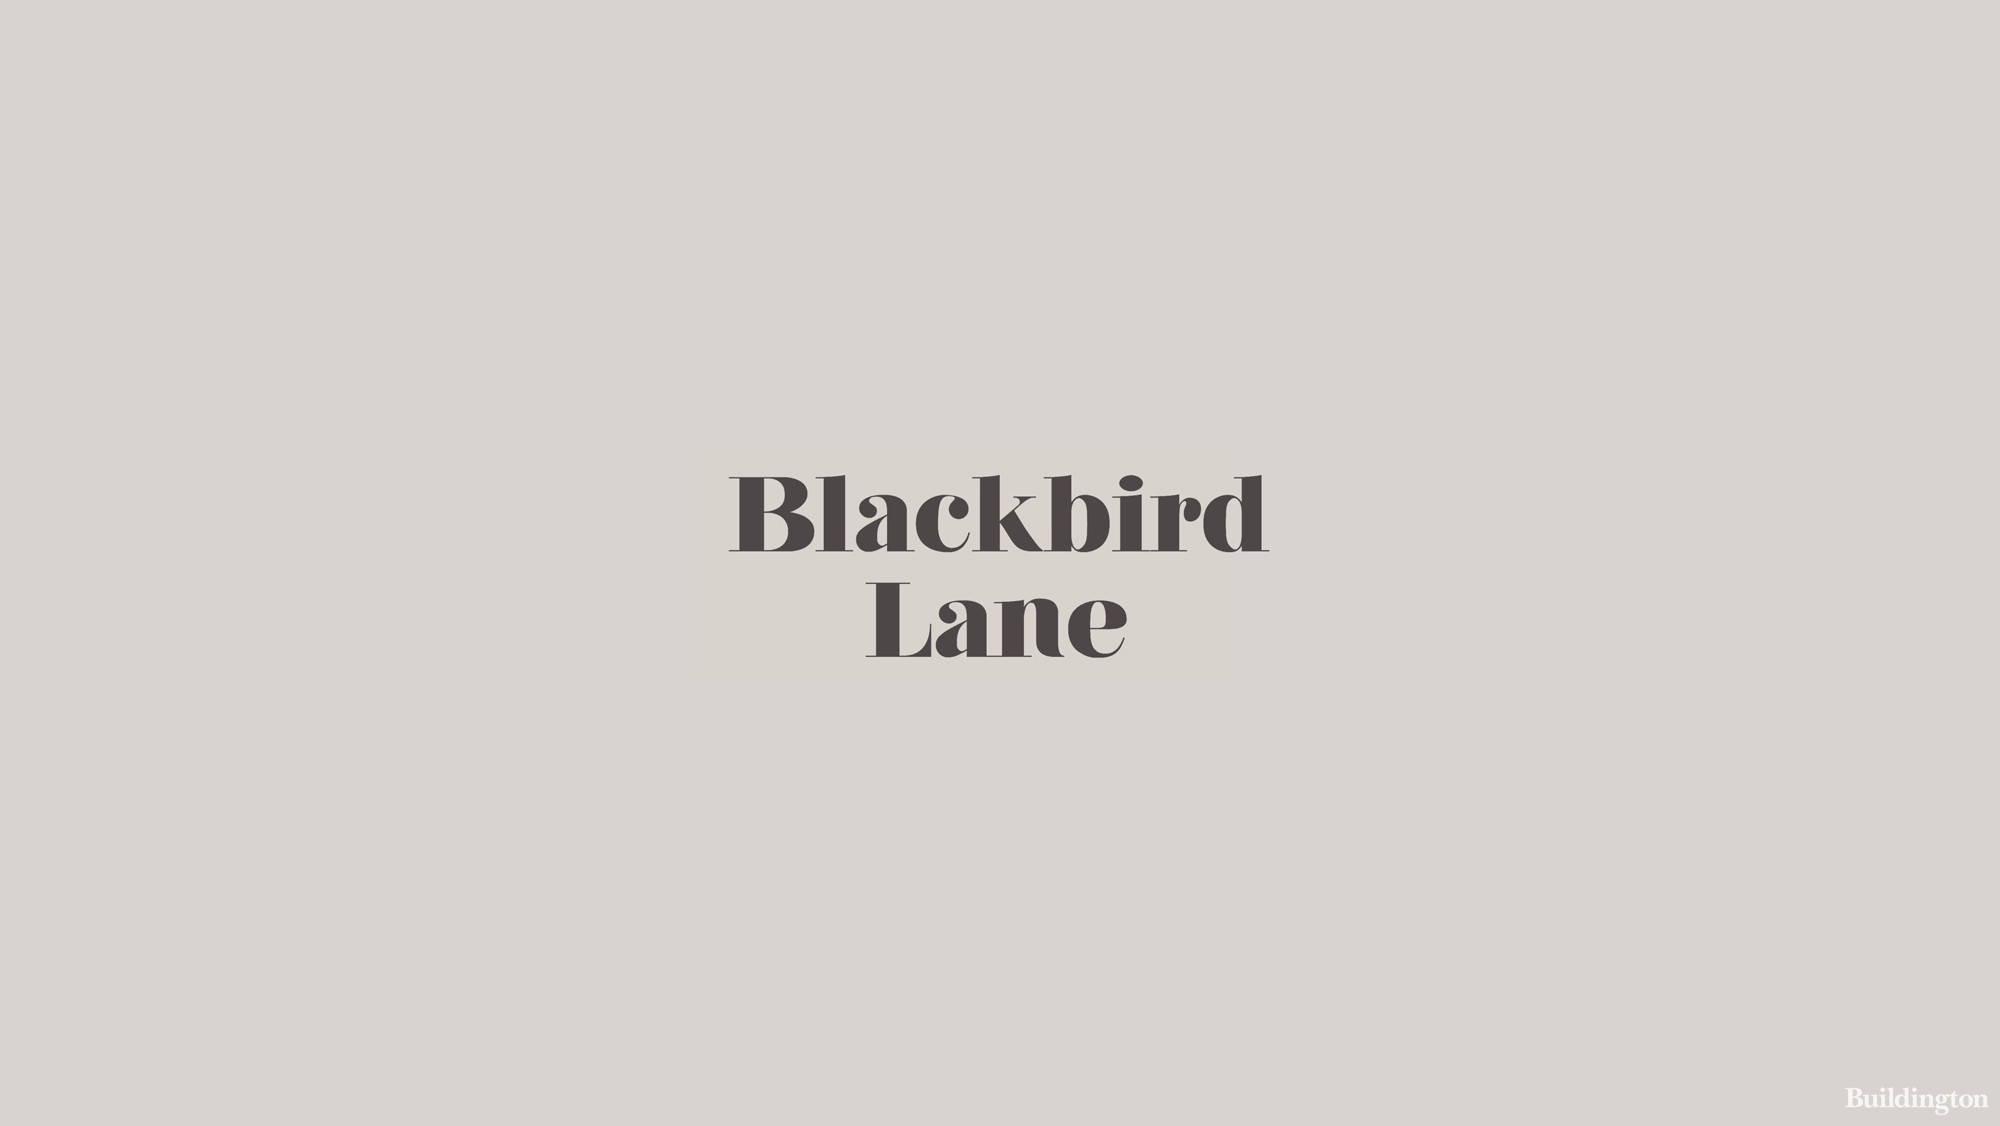 Blackbird Lane property development website design and imagery by ADEMCHIC